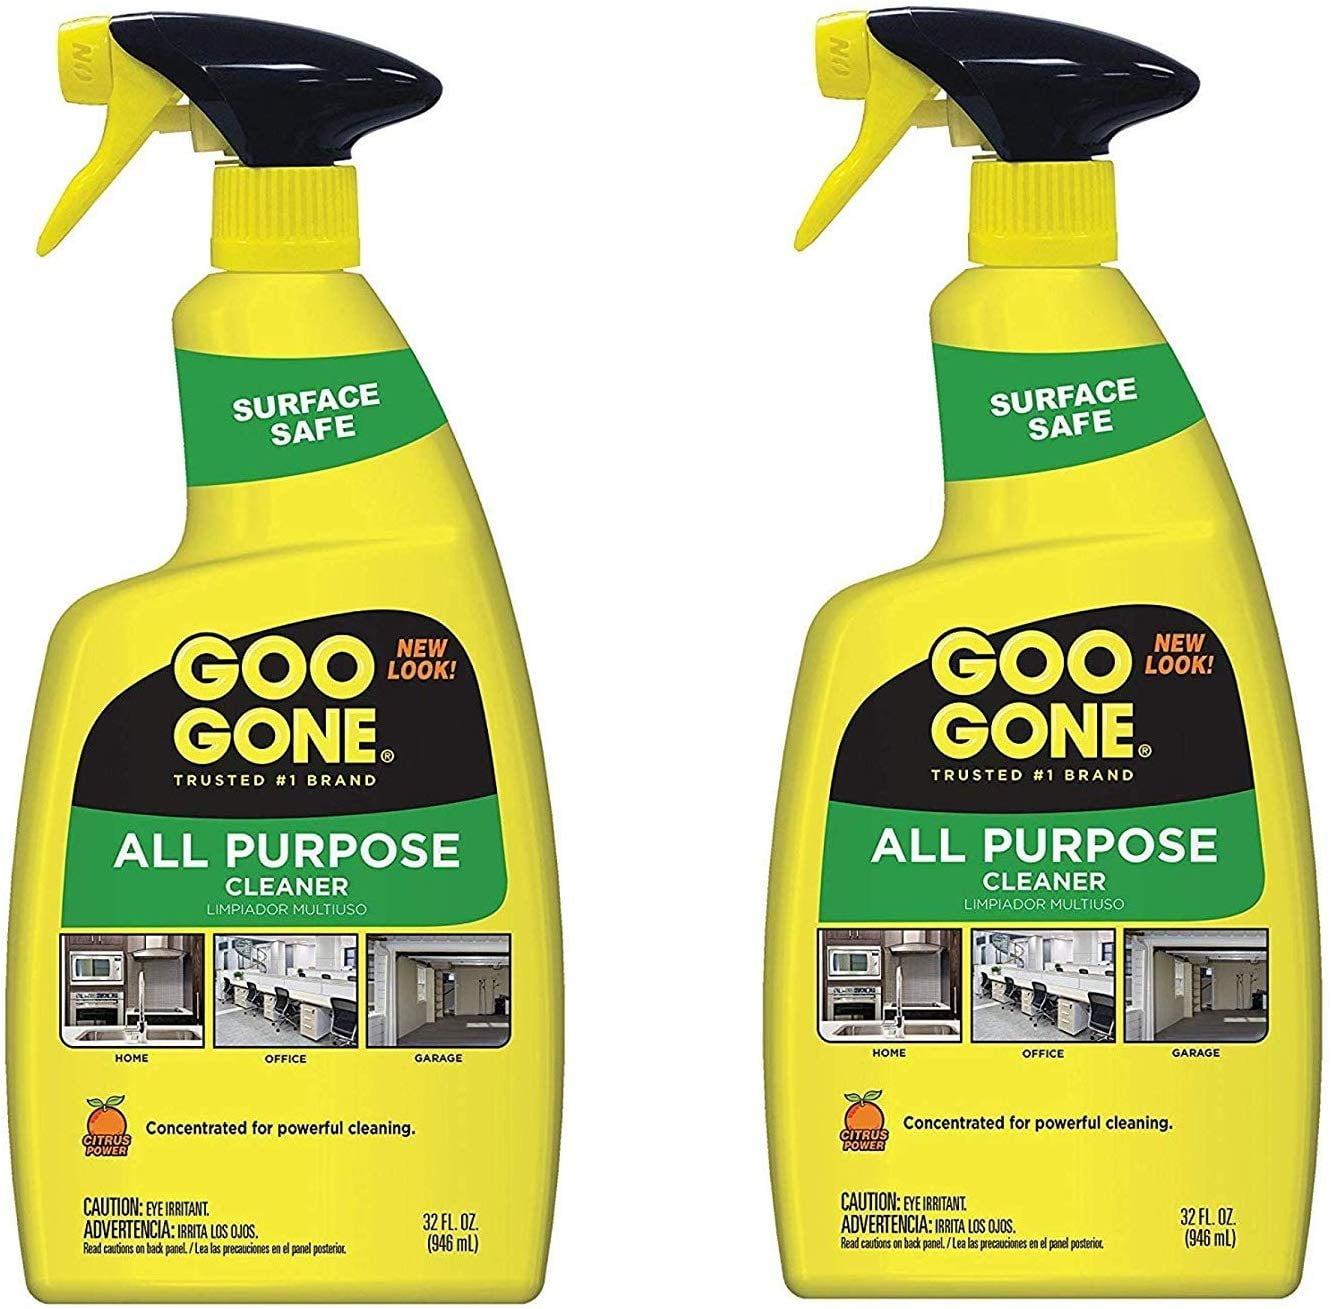 Goo Gone Original Spray Gel Adhesive Remover - 12 Oz 